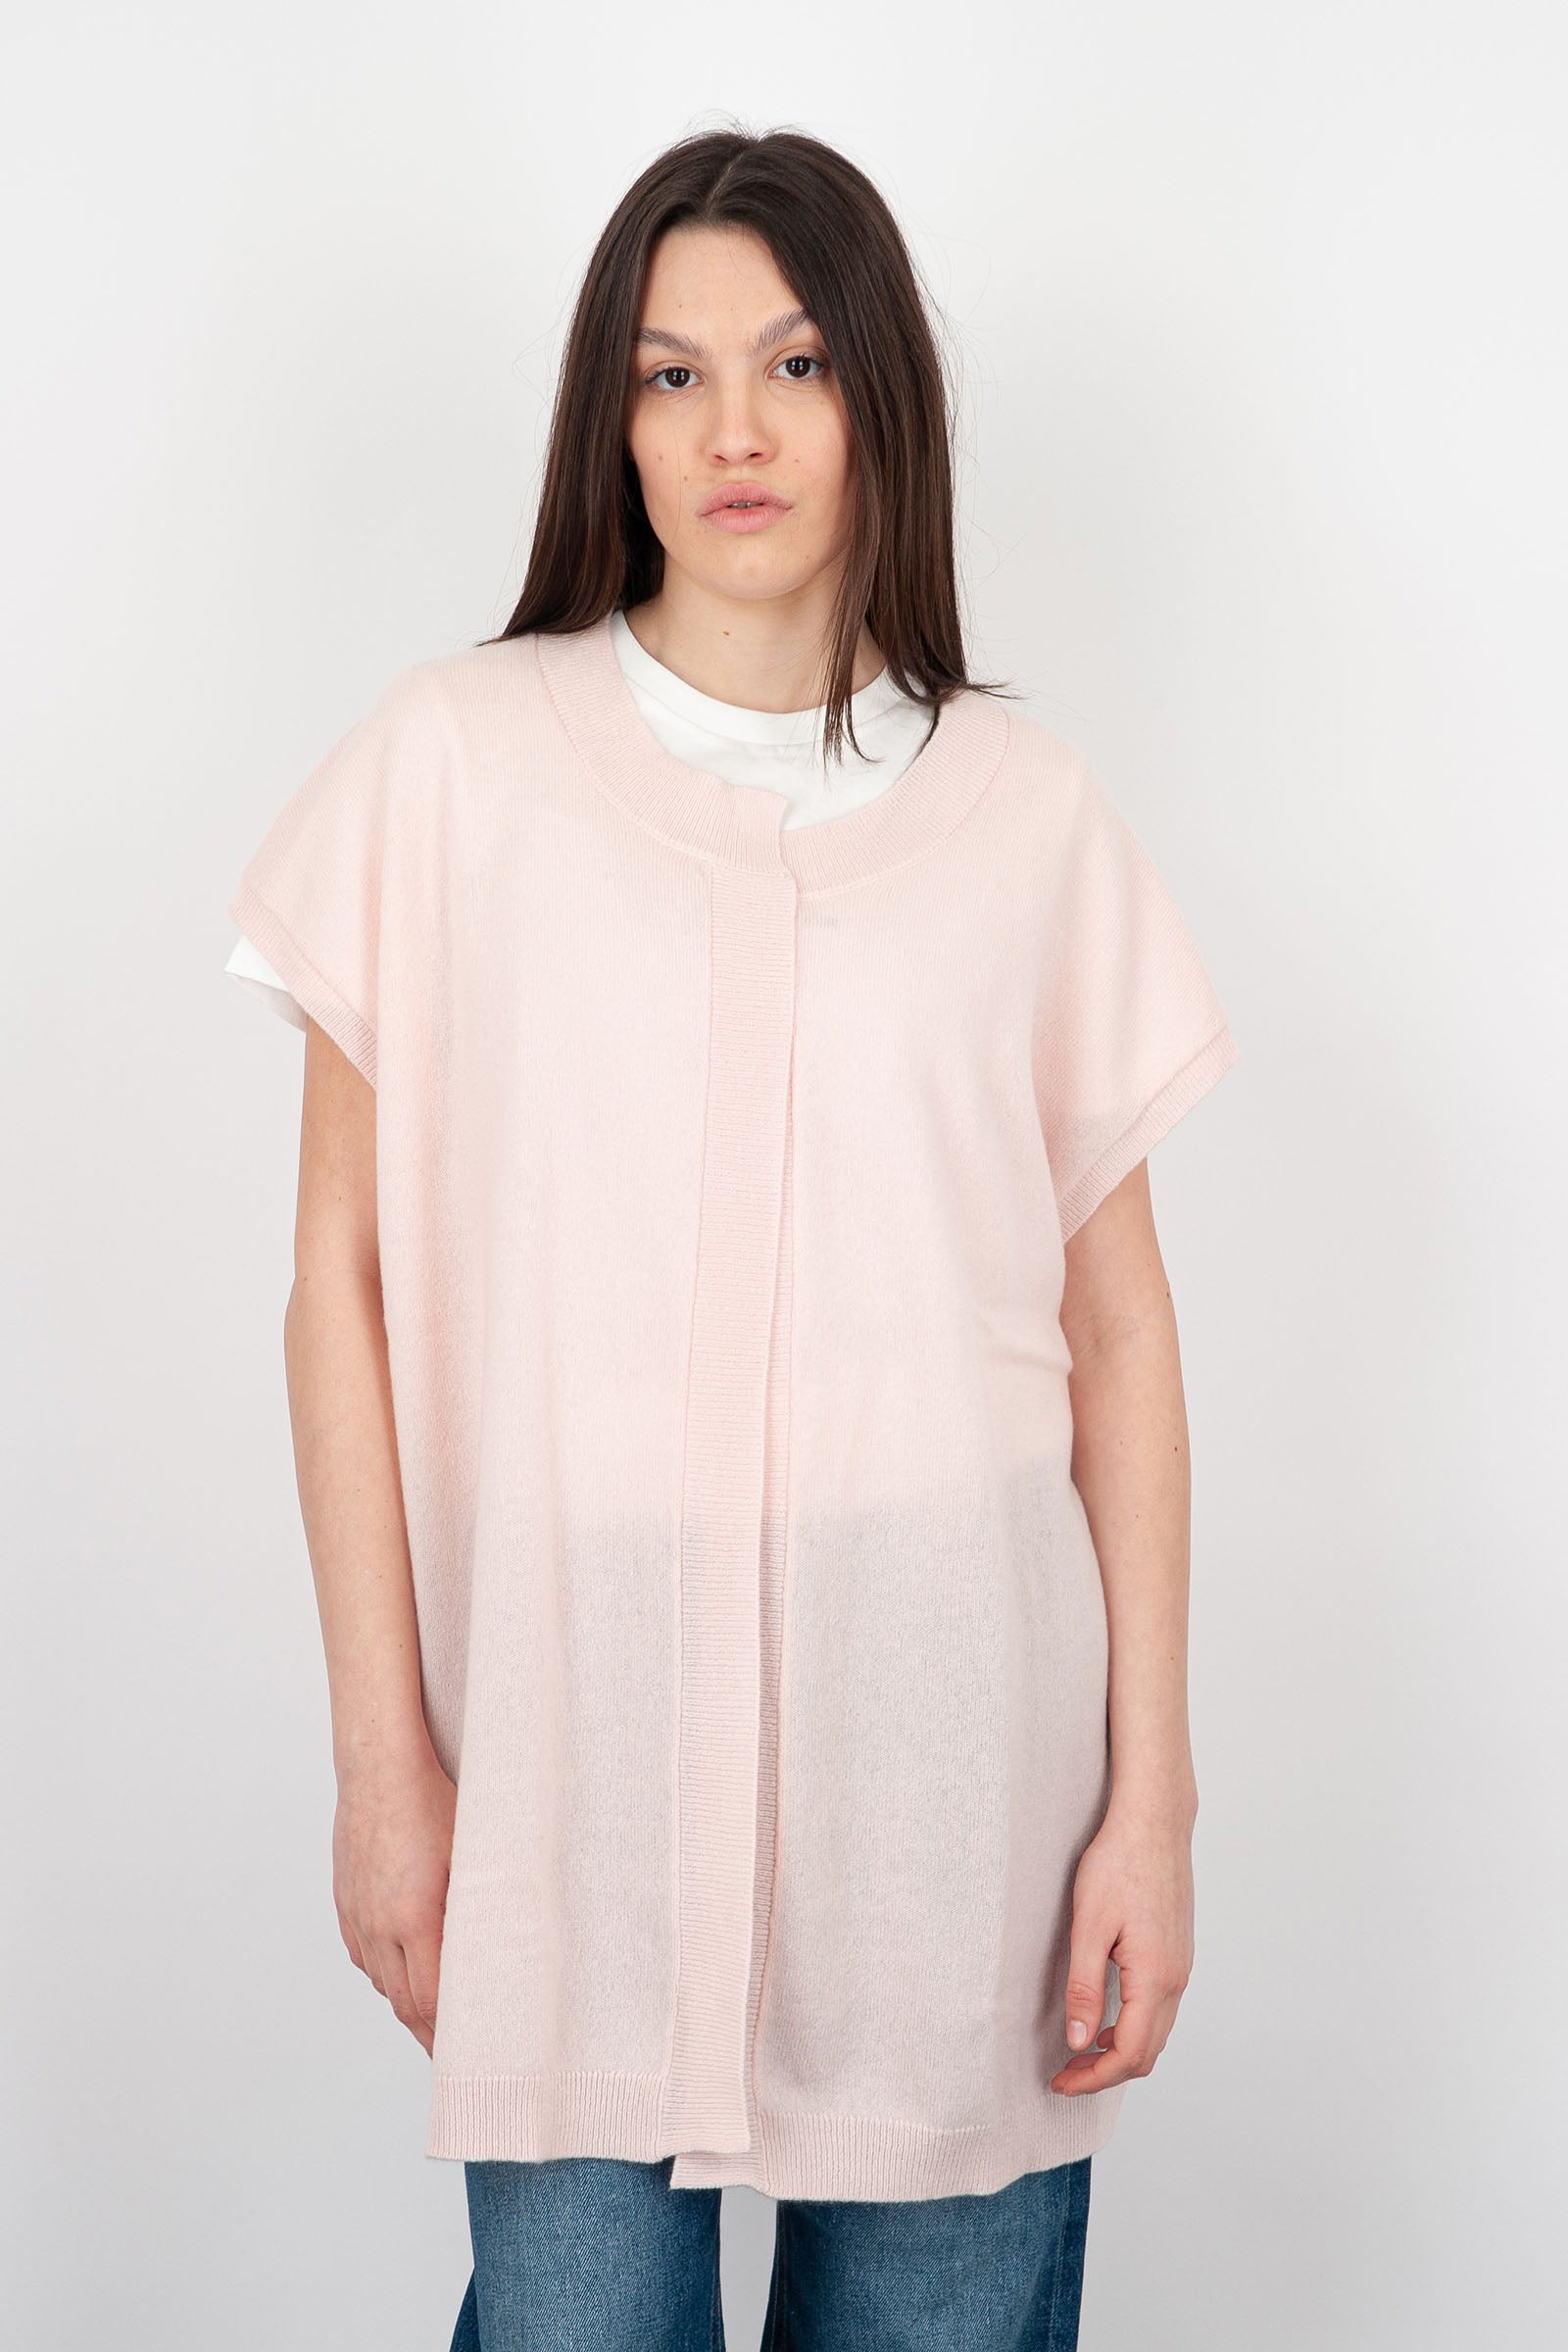 Absolut Cashmere Diana Light Pink Wool Cardigan - 1